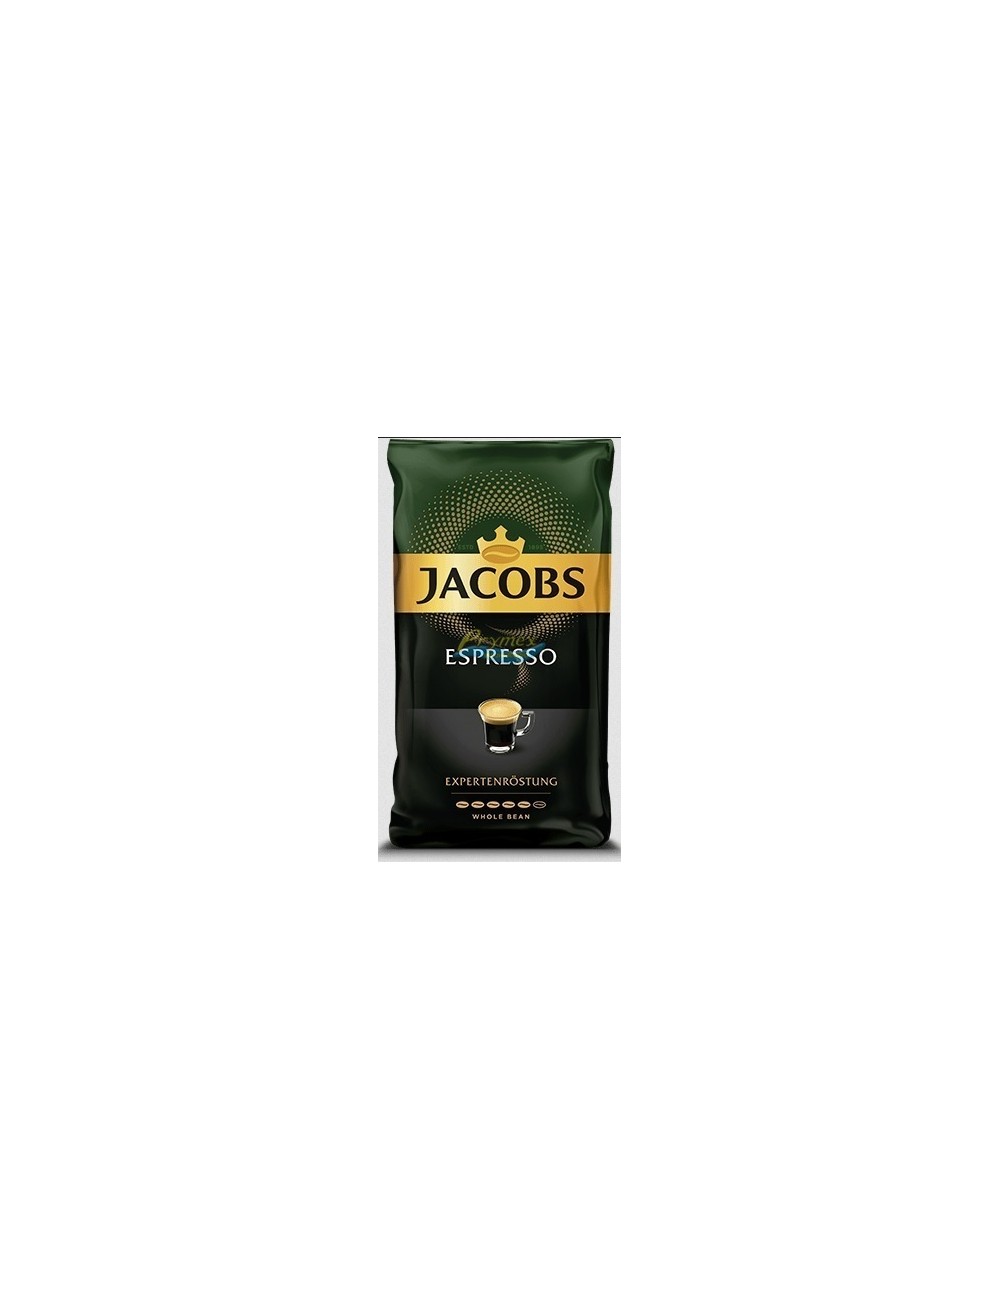 Jacobs Kawa Ziarnista Espresso 1 kg